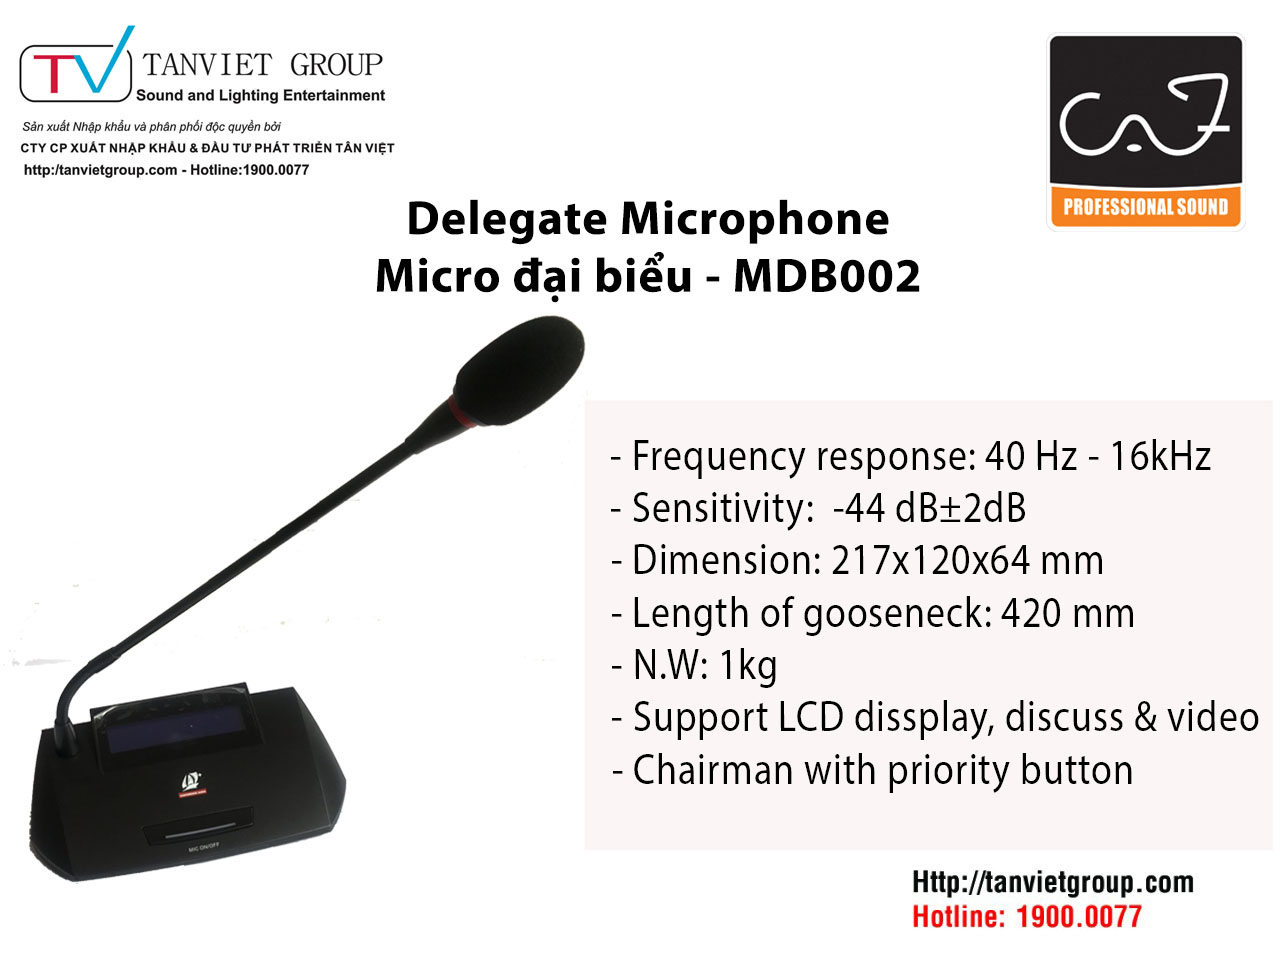 Micro đại biểu CAF MDB002